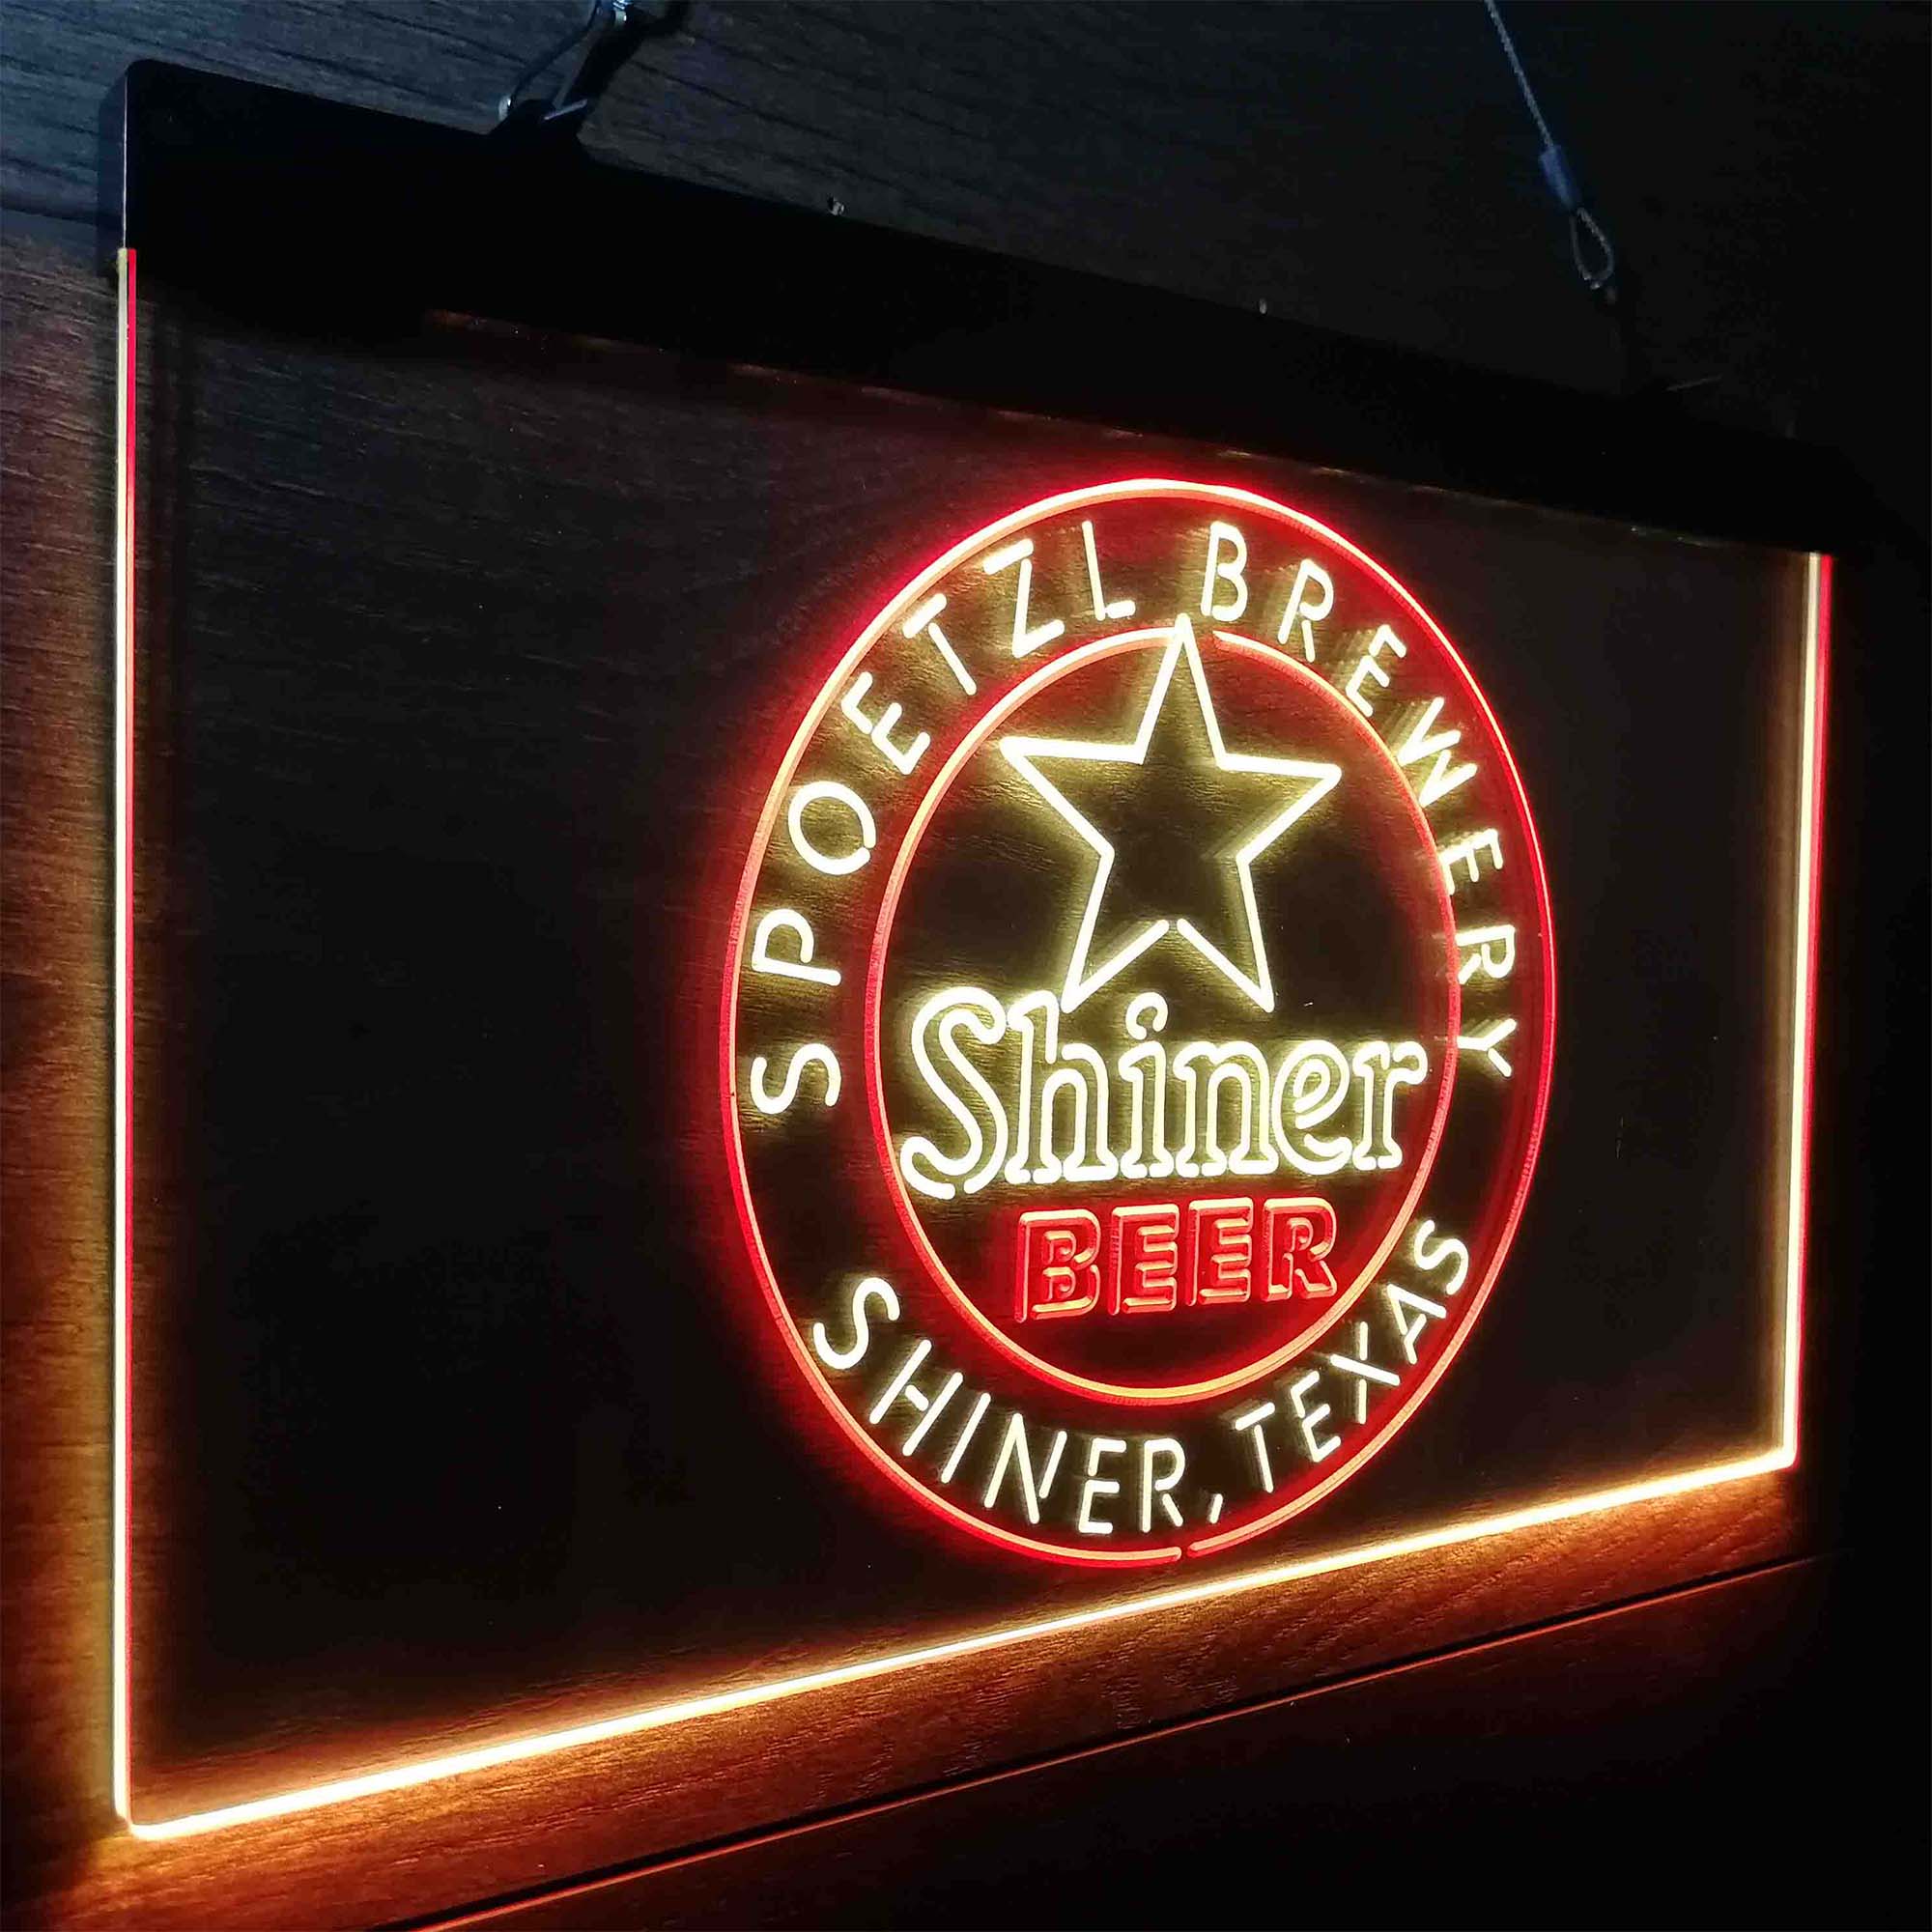 Shiner Beer Star LED Neon Sign